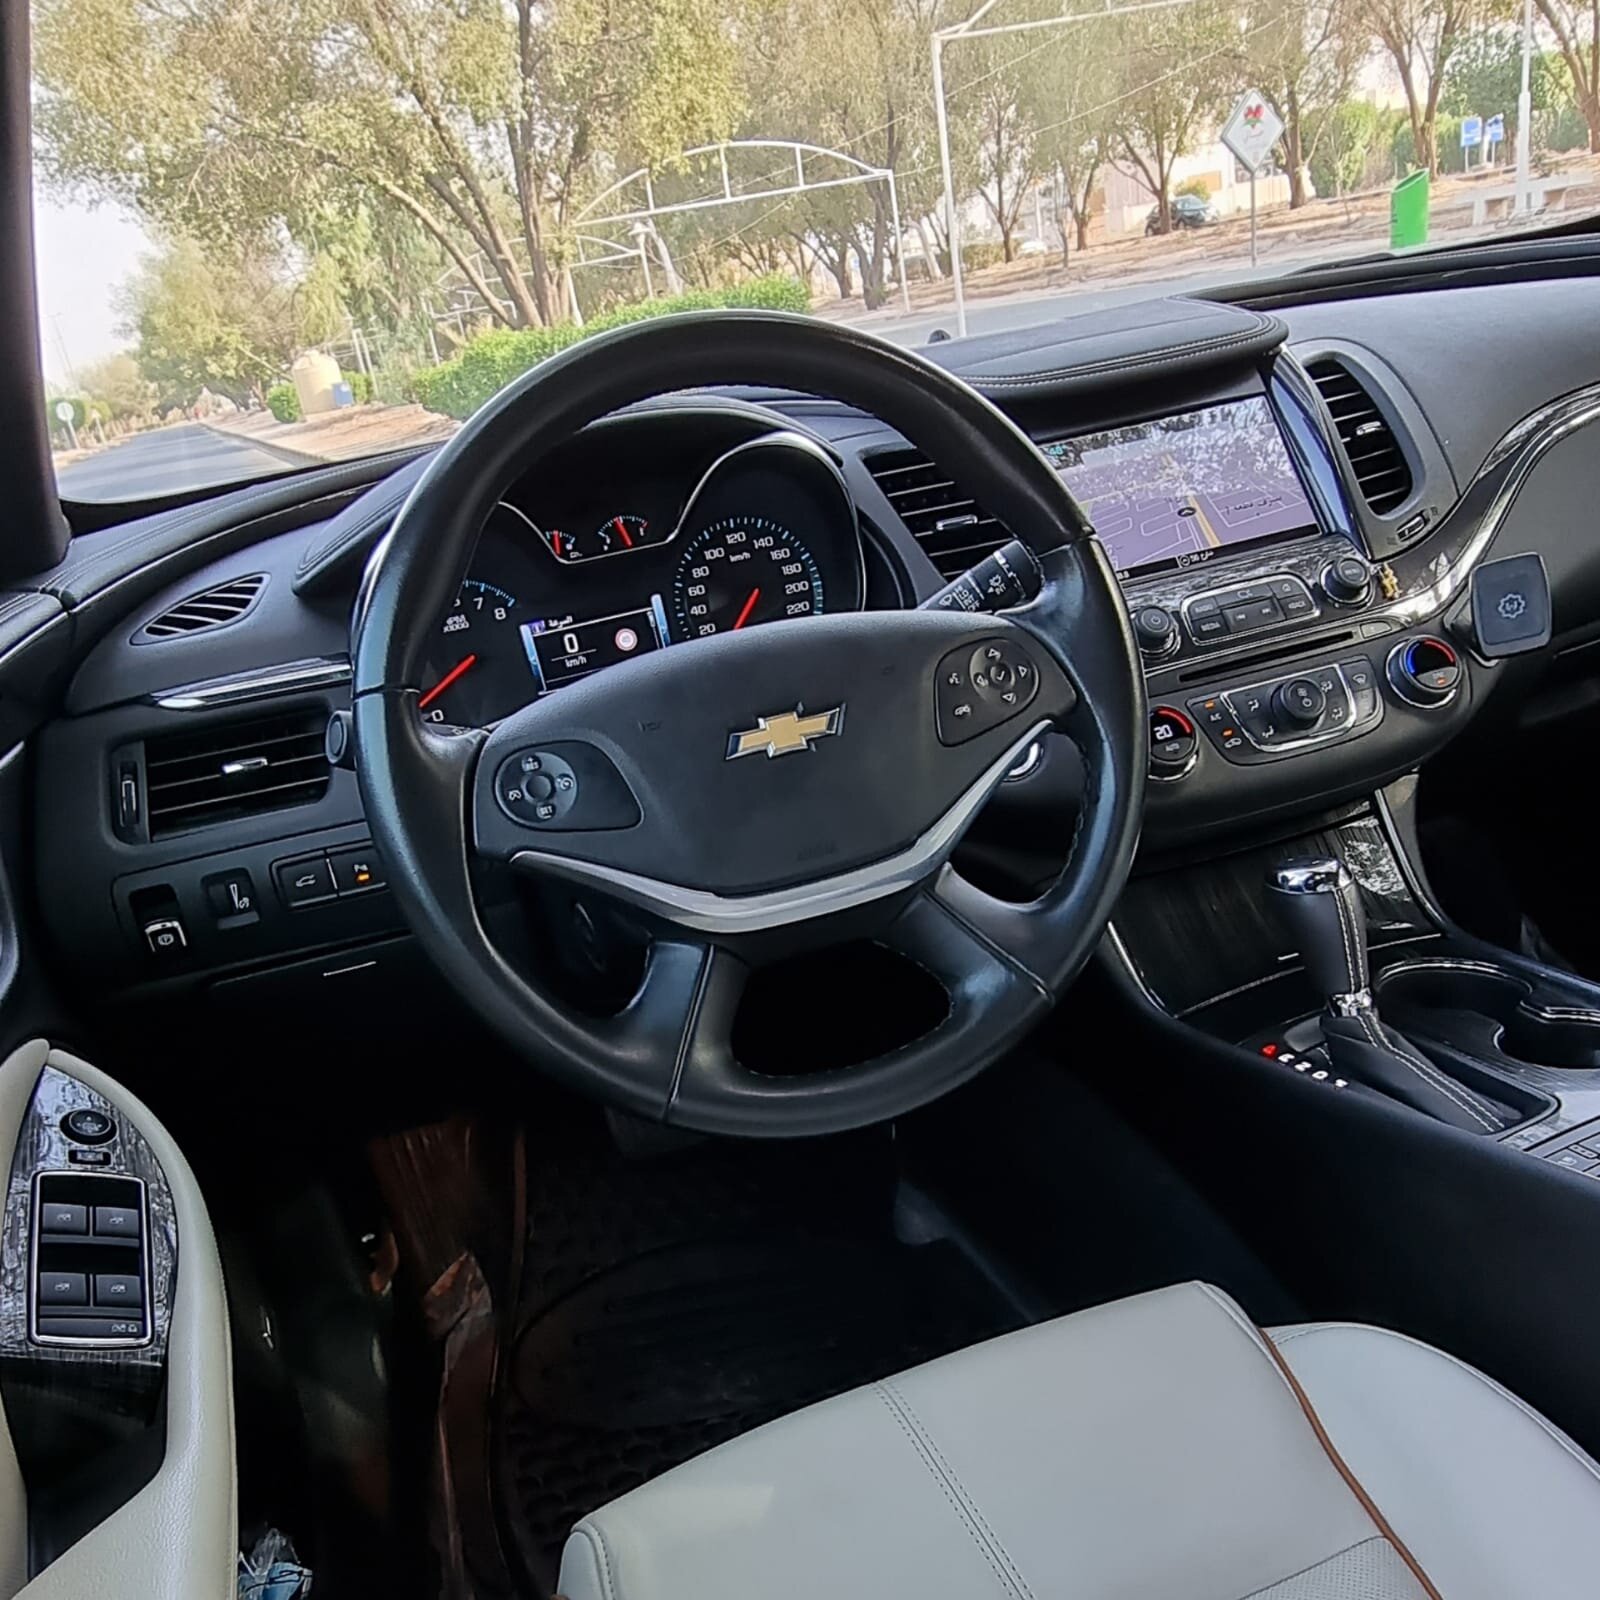 Chevrolet impala 2019 شفروليه امبالا ٢٠١٩7.jpeg